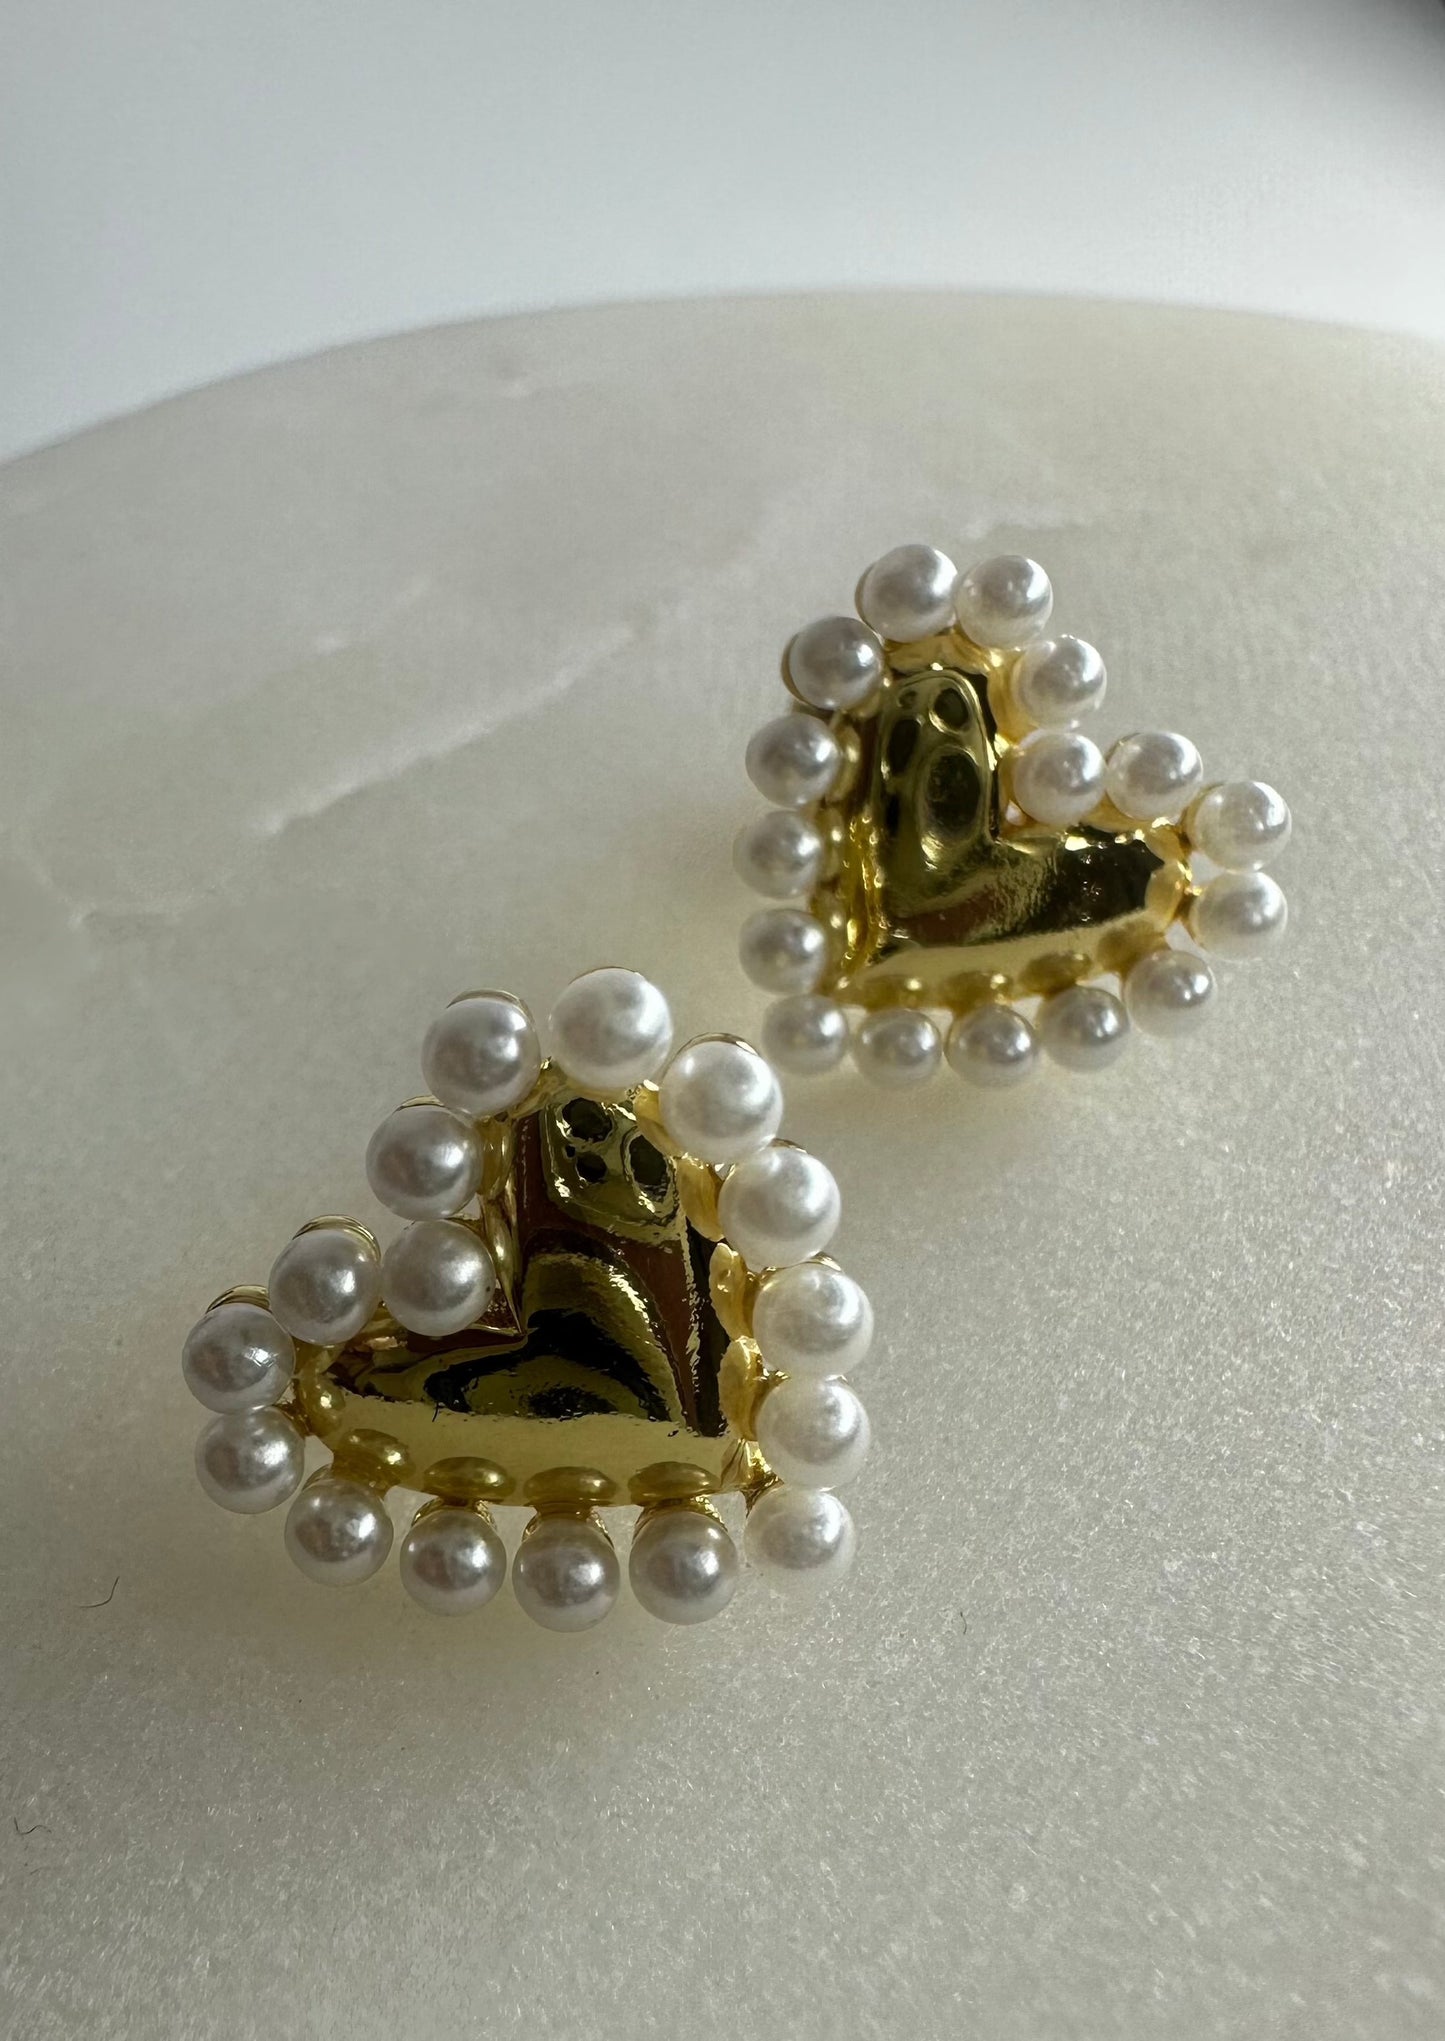 Heart Steel and Pearls Earrings-S139